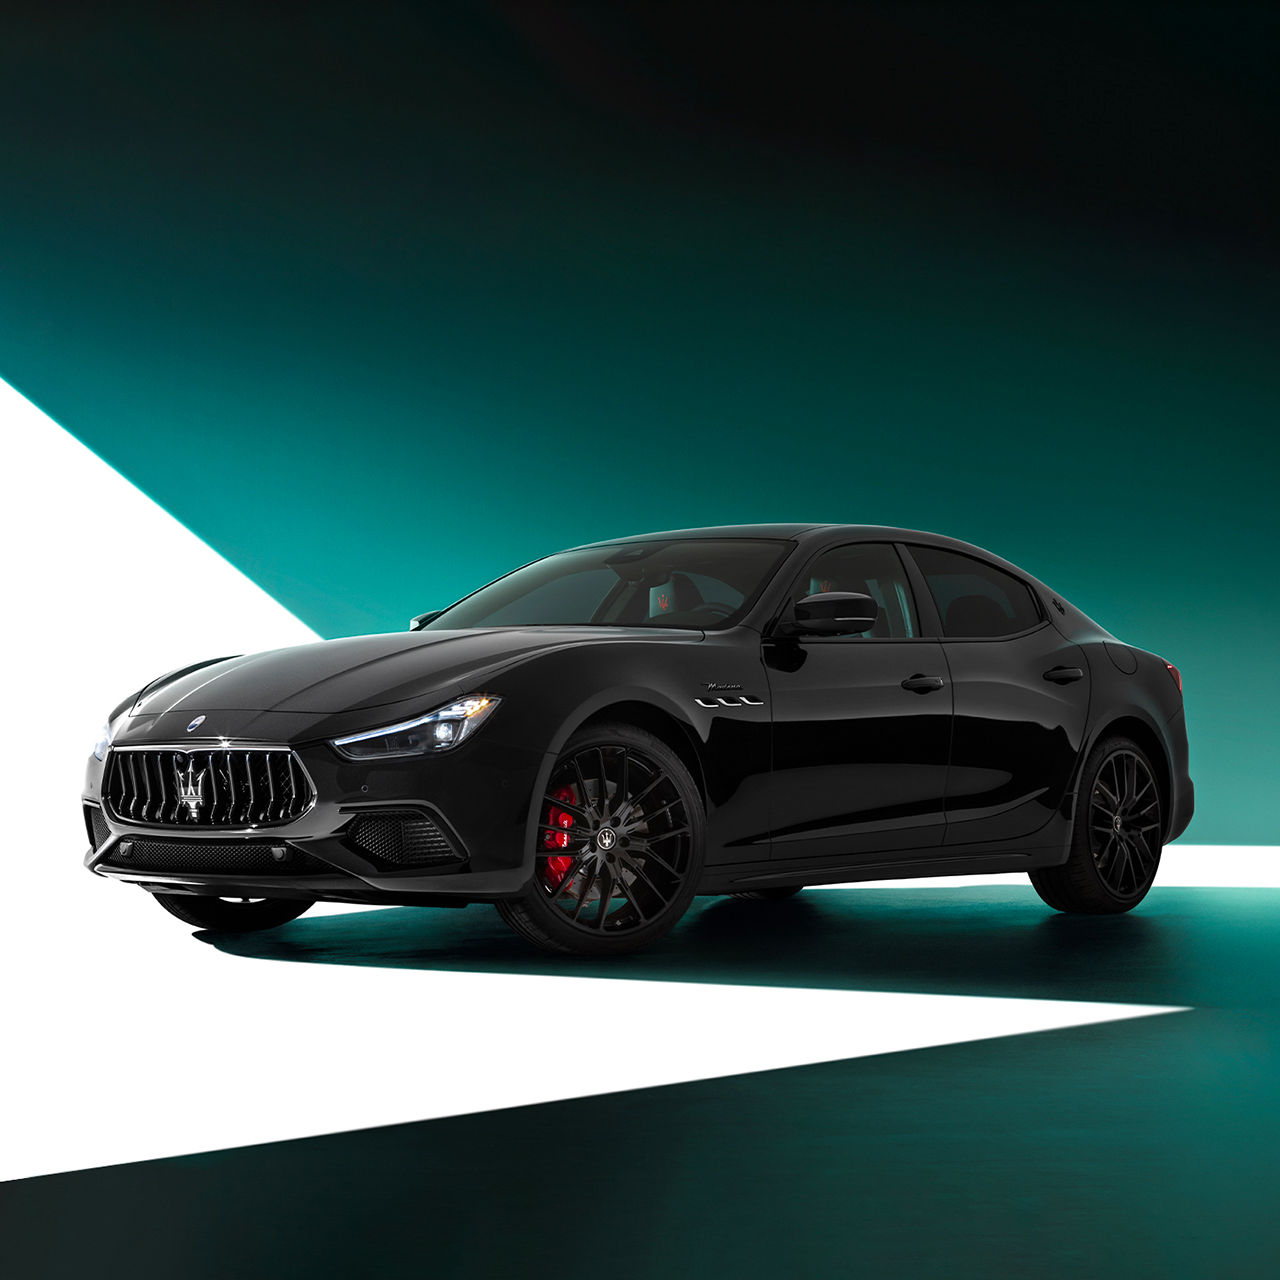 Schema Zenuw Picasso Maserati Models: SUVs, Sports Cars, and Sedans | Maserati USA